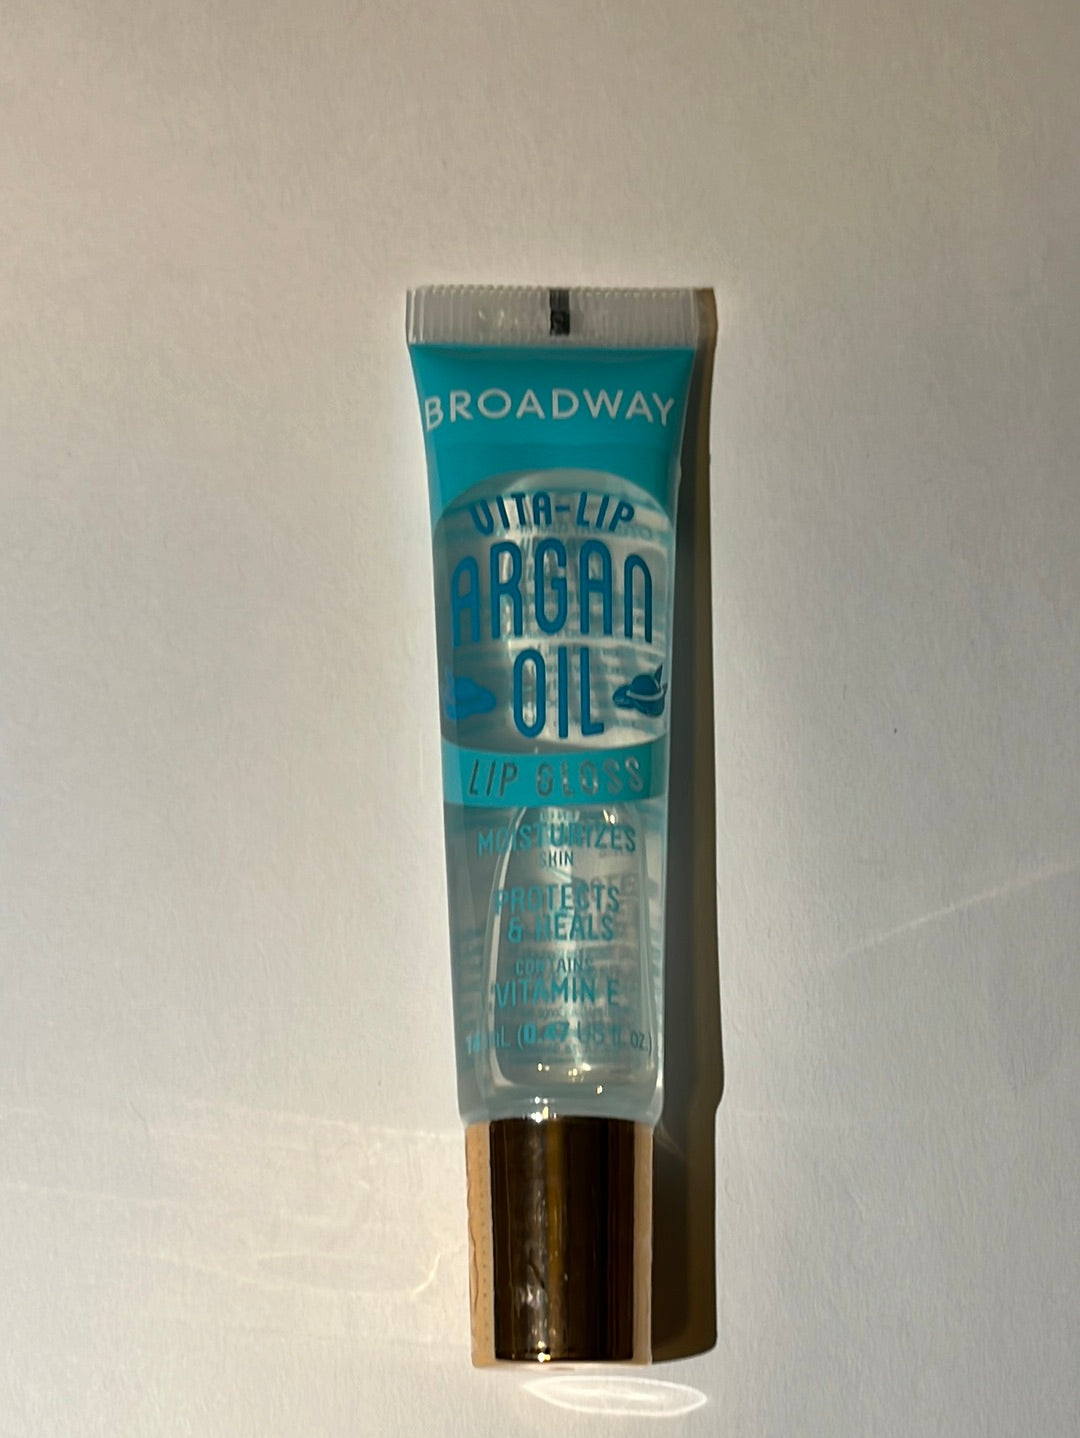 Broadway Argan Oil Lip Gloss